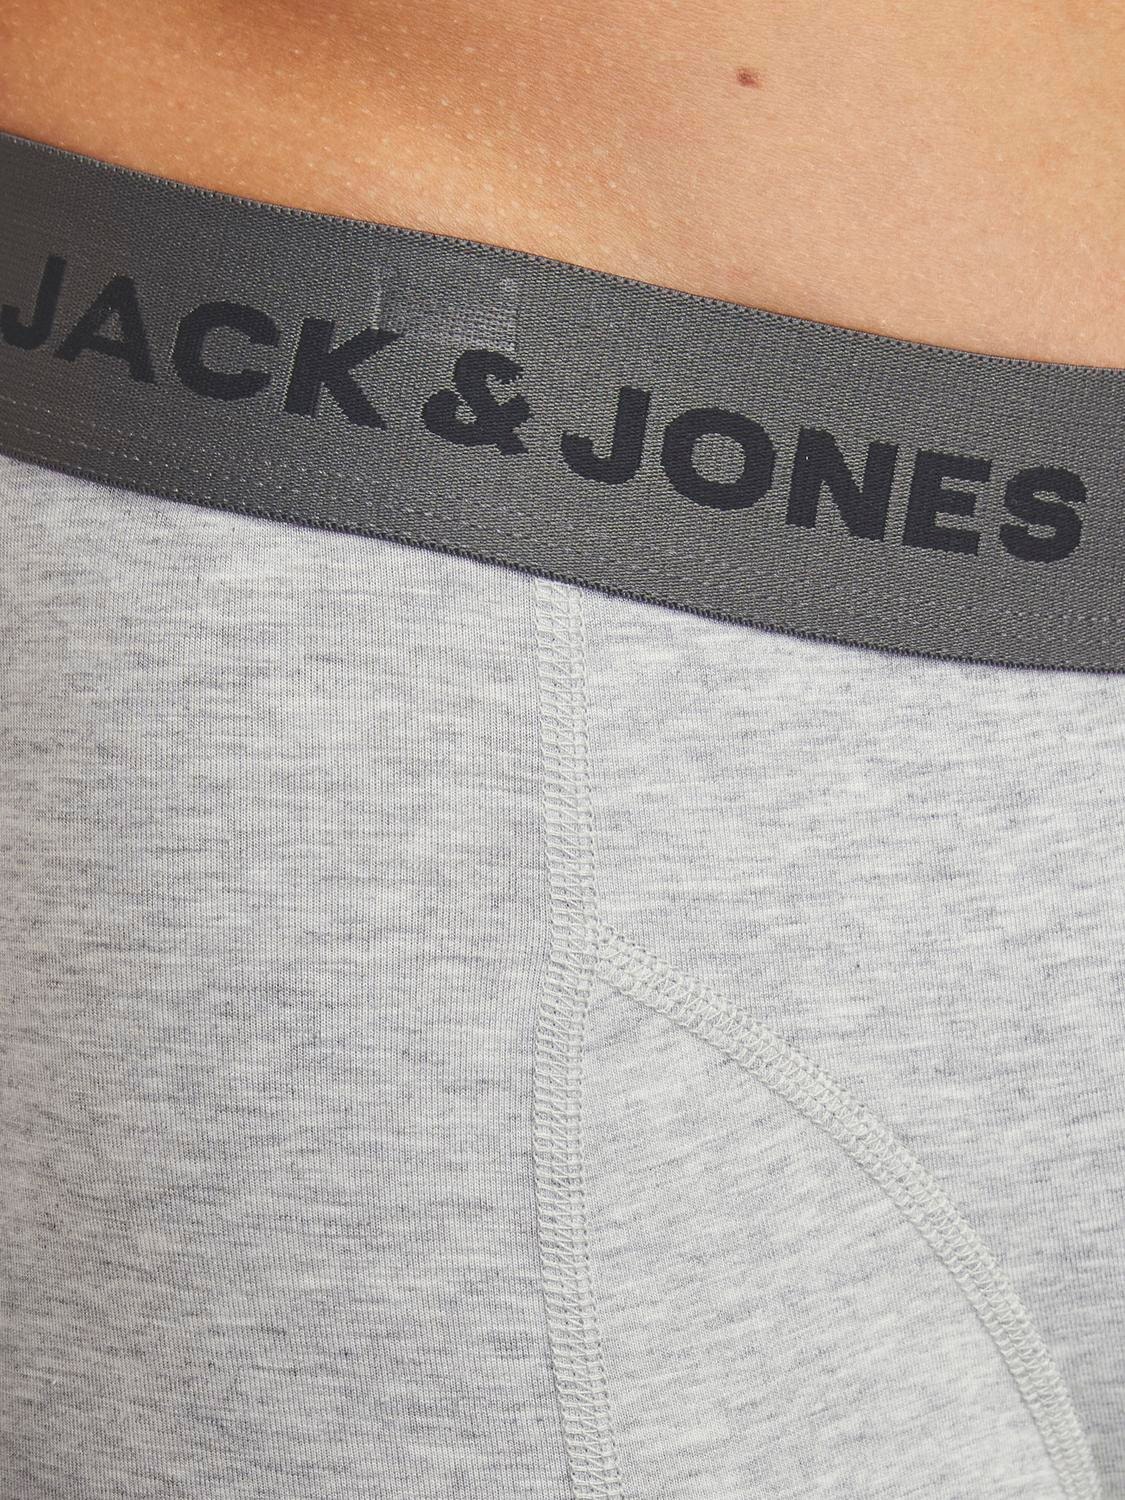 Jack & Jones 3-pak Bokserki -Dark Grey Melange - 12252801